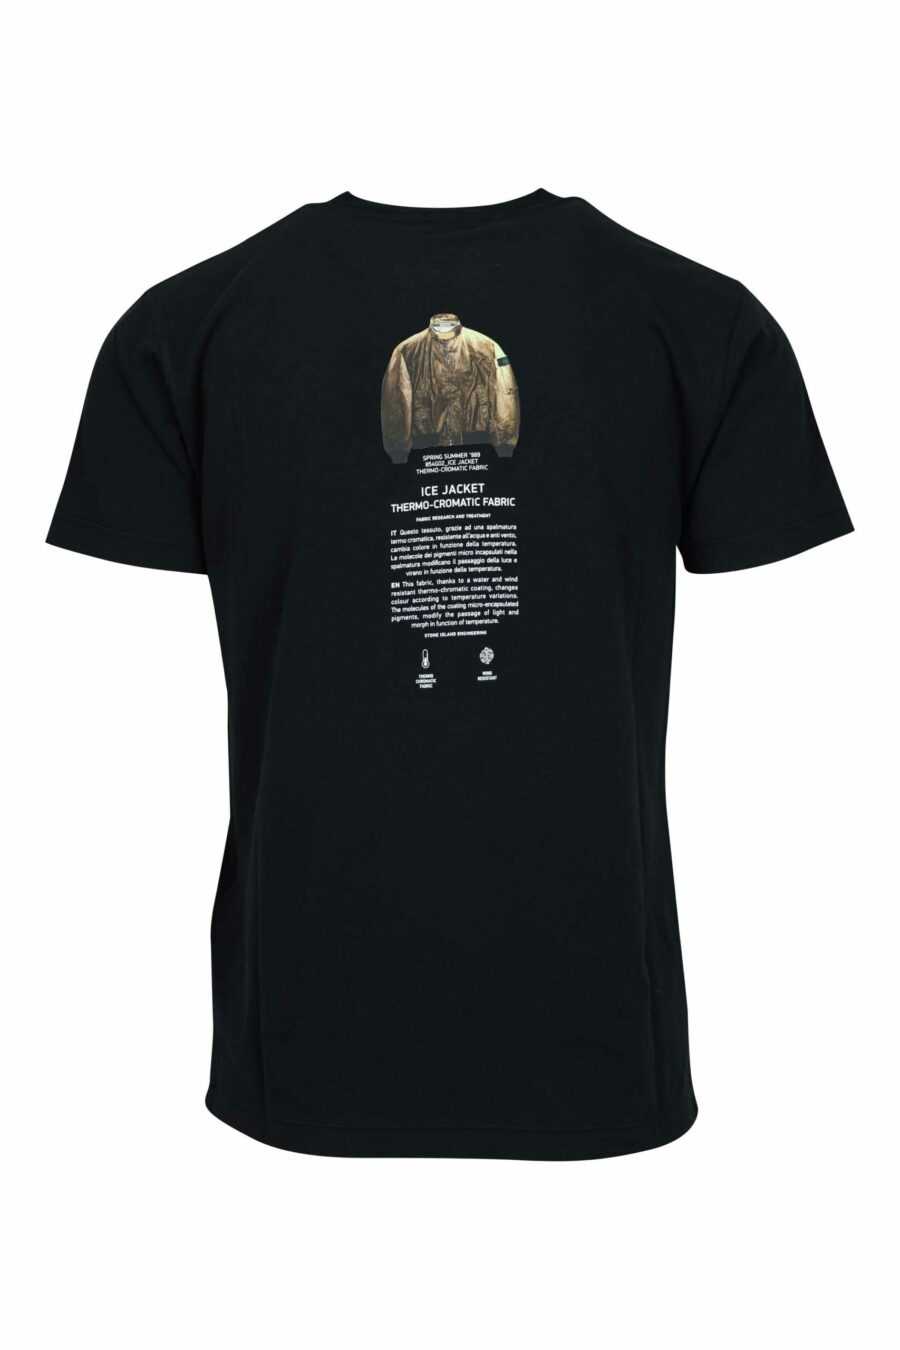 Camiseta negra con minilogo "archivio" centrado - 8052572924798 1 scaled